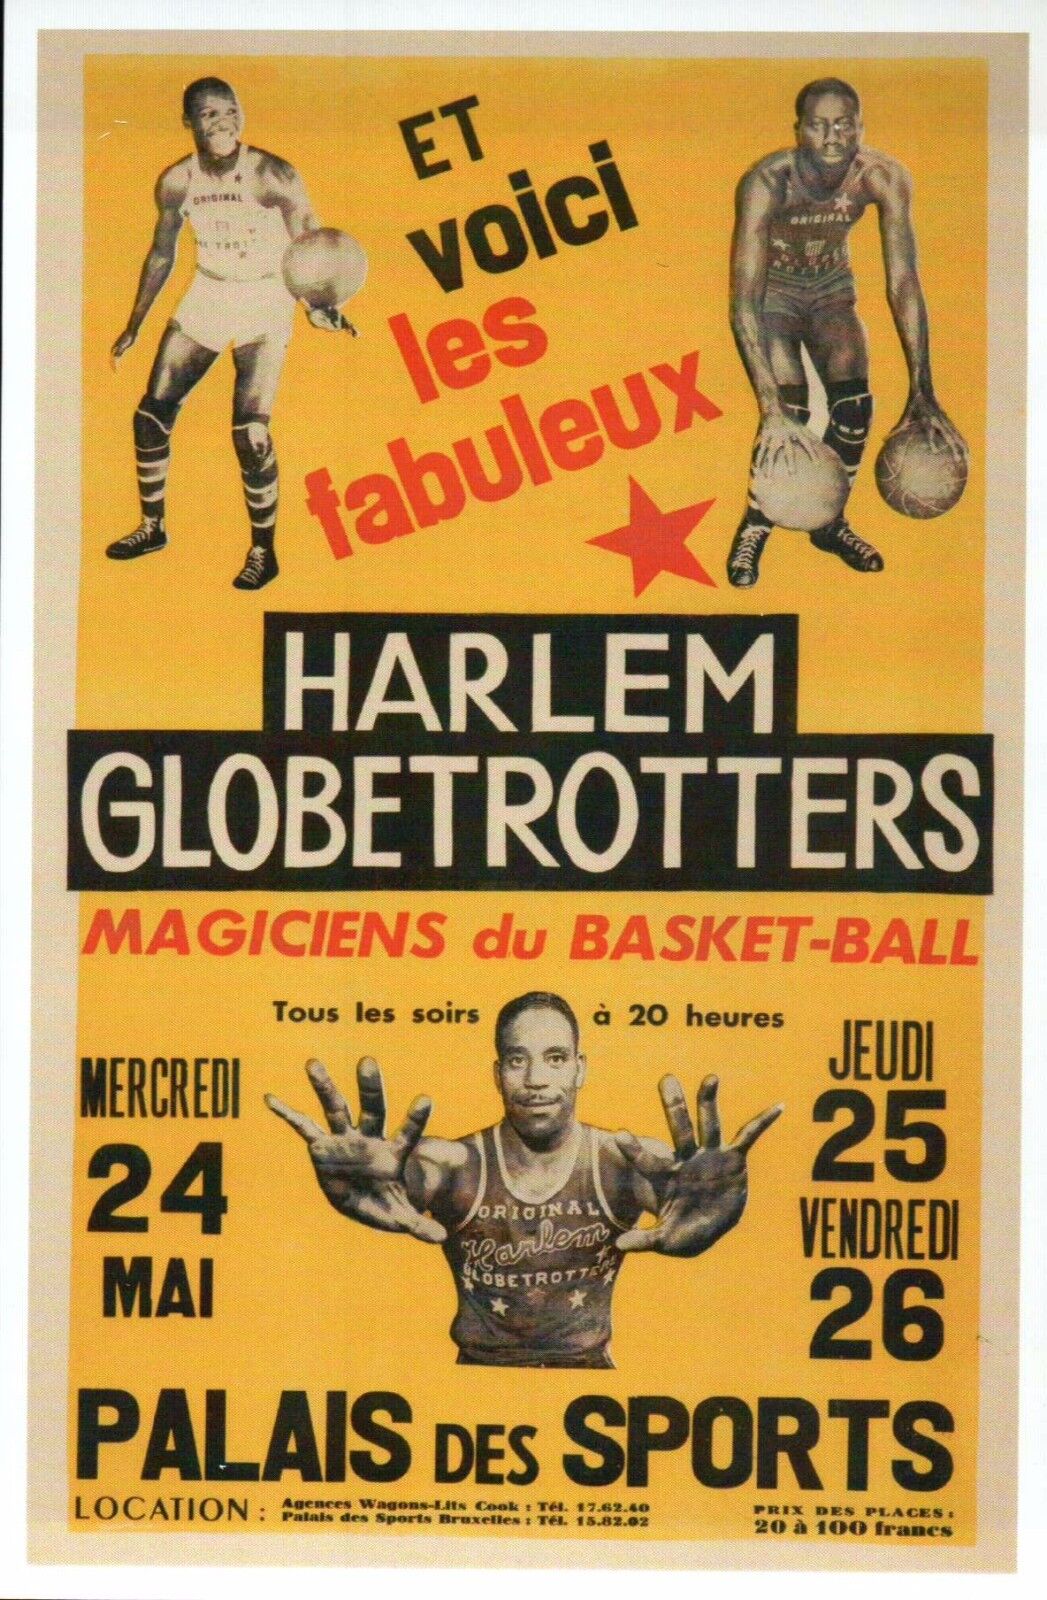 Harlem Globetrotters Basketball Magicians, French Poster Image - Modern Postcard